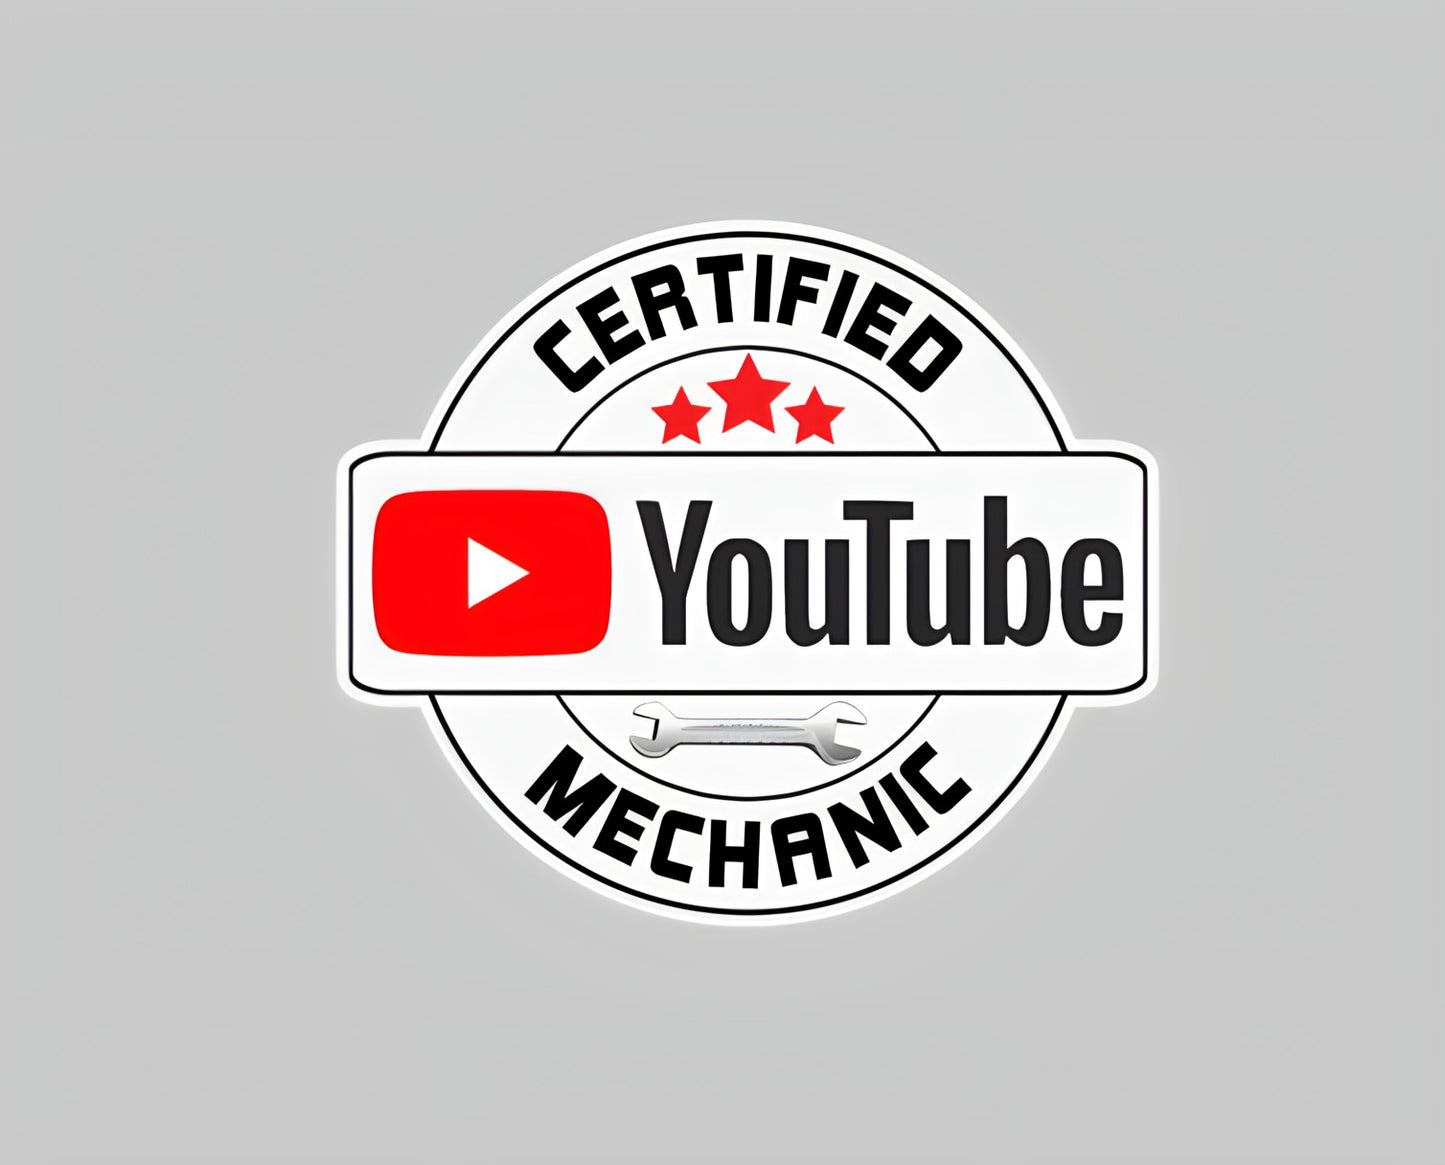 Certified YouTube Mechanic Sticker - Hard Hat Stickers